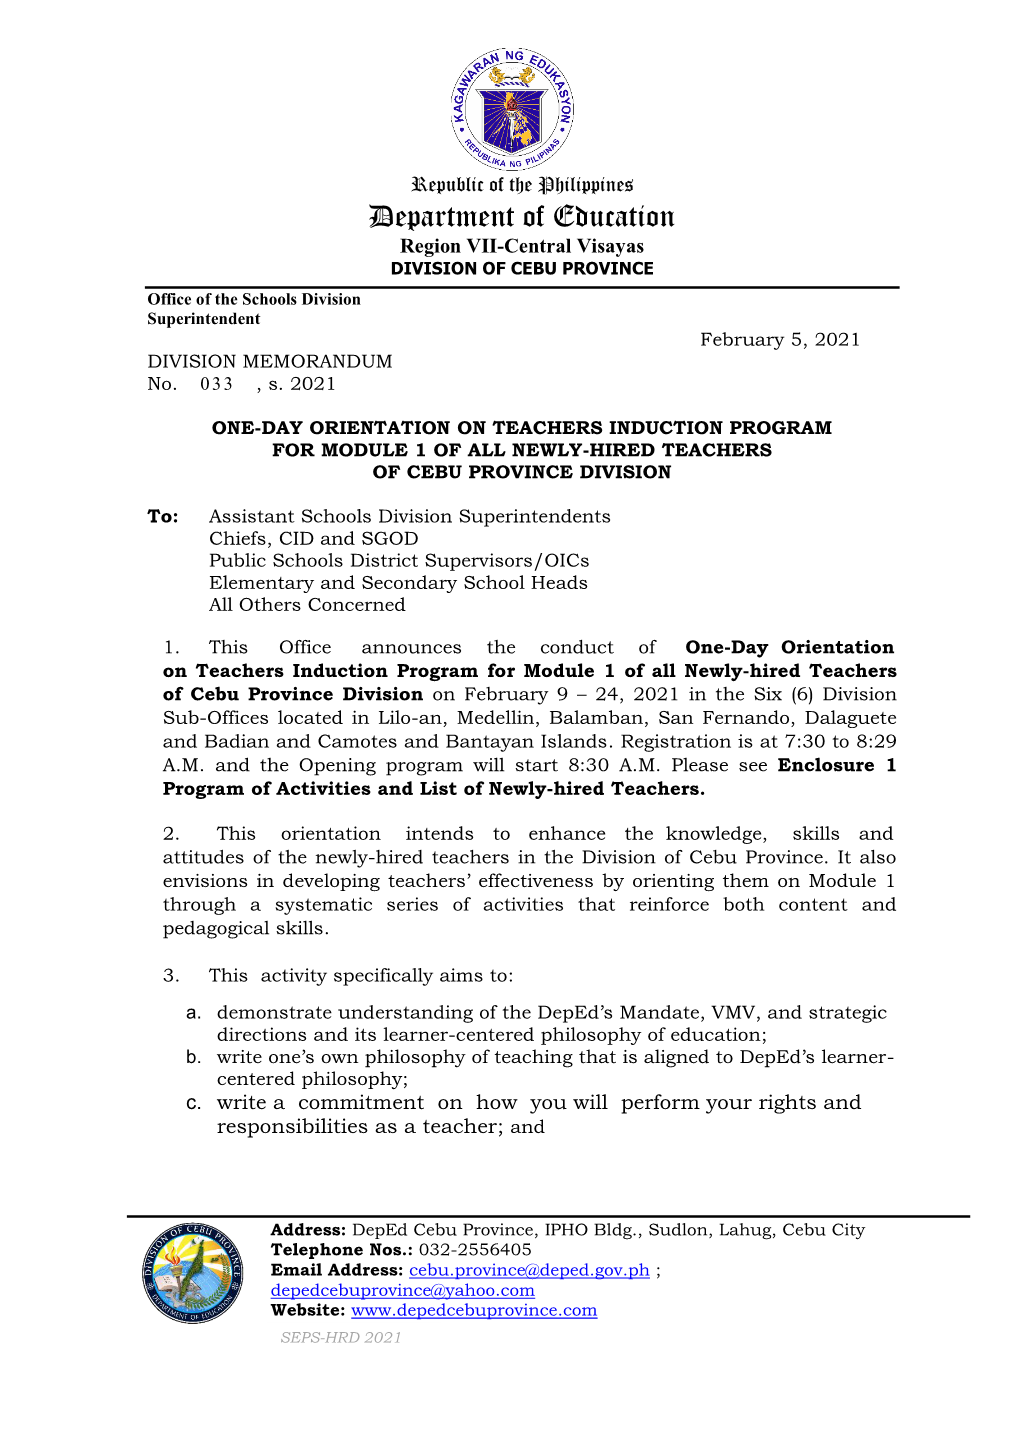 Department of Education Region VII-Central Visayas DIVISION of CEBU PROVINCE